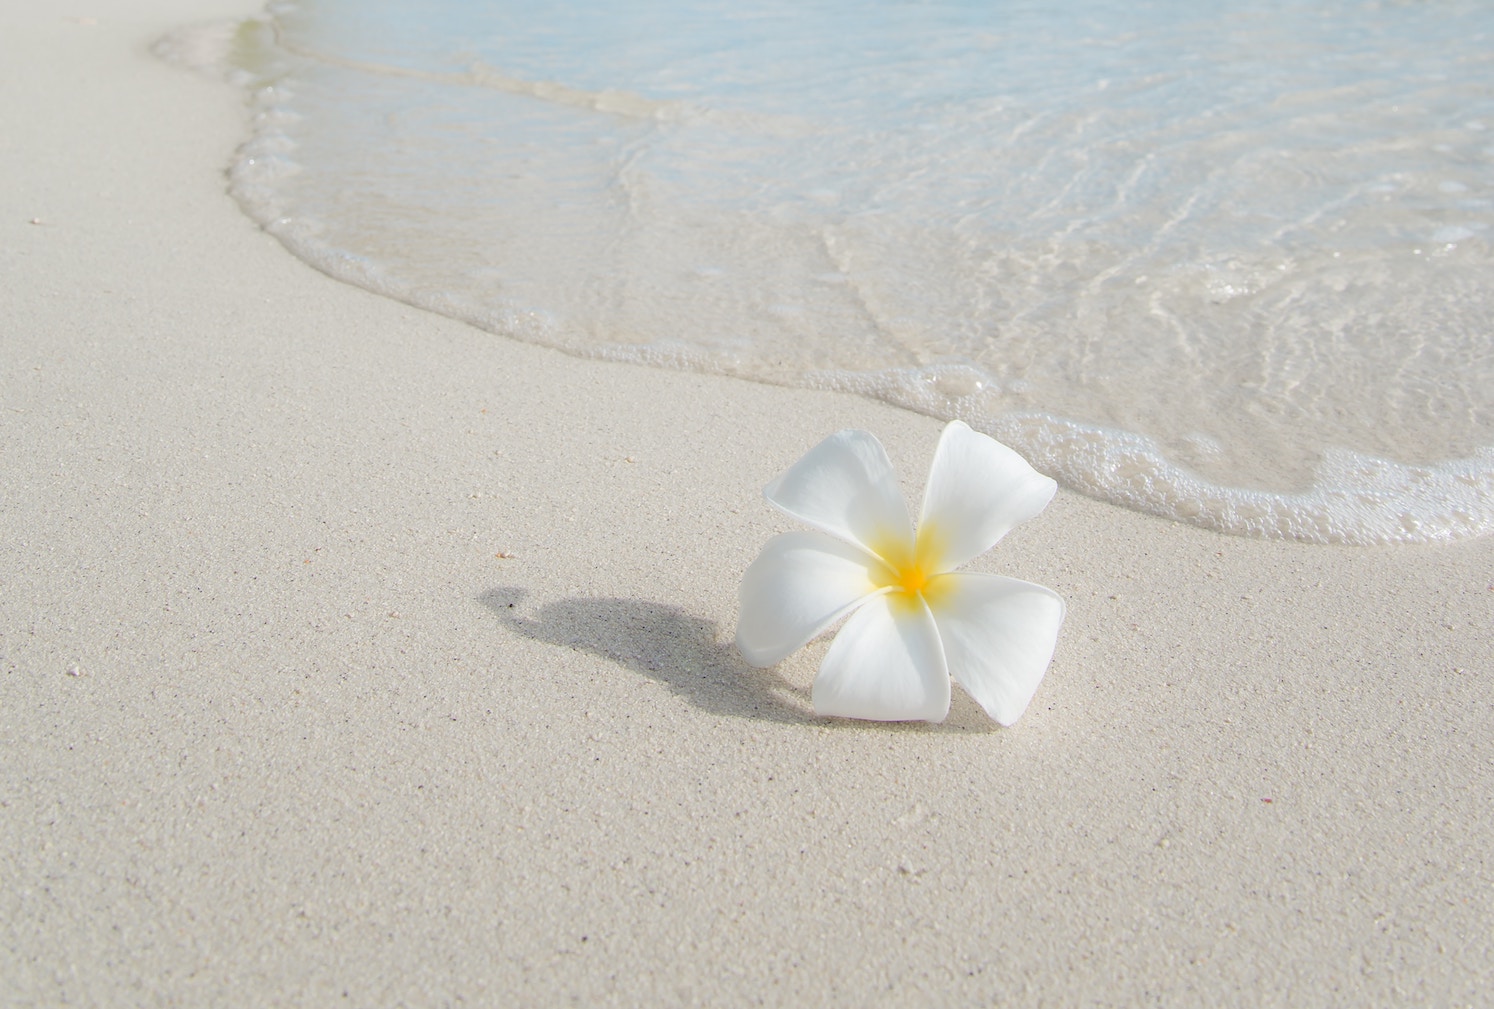 Flower on beach representing summer